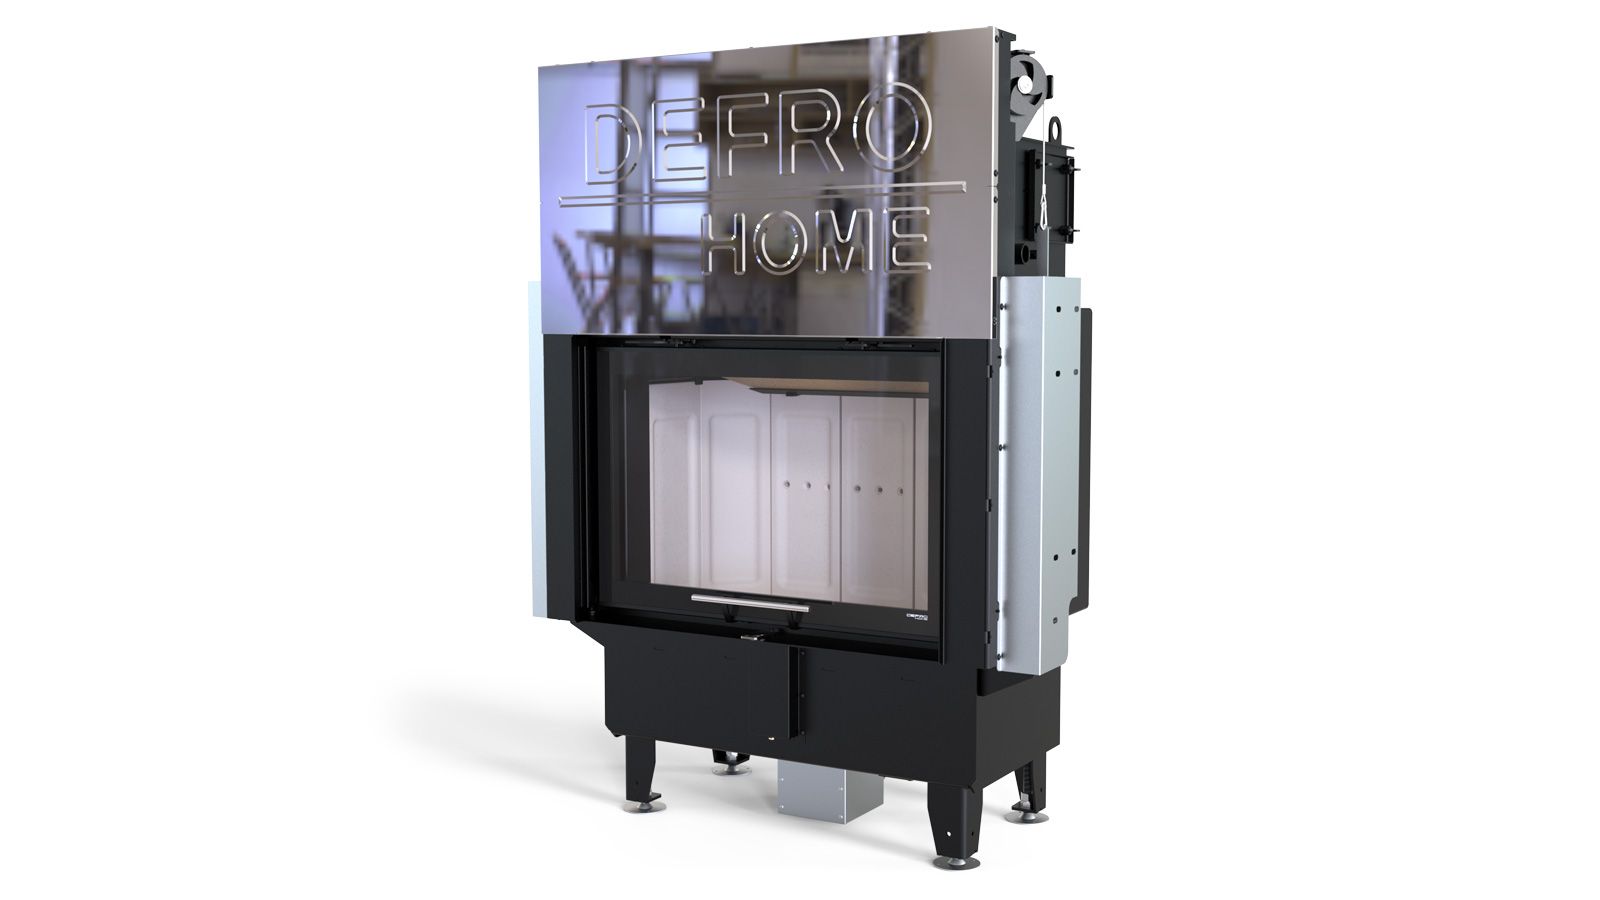 imageoferta53119201080 - Free-standing wood-burning stove DECOR C with oven. Honey ceramics